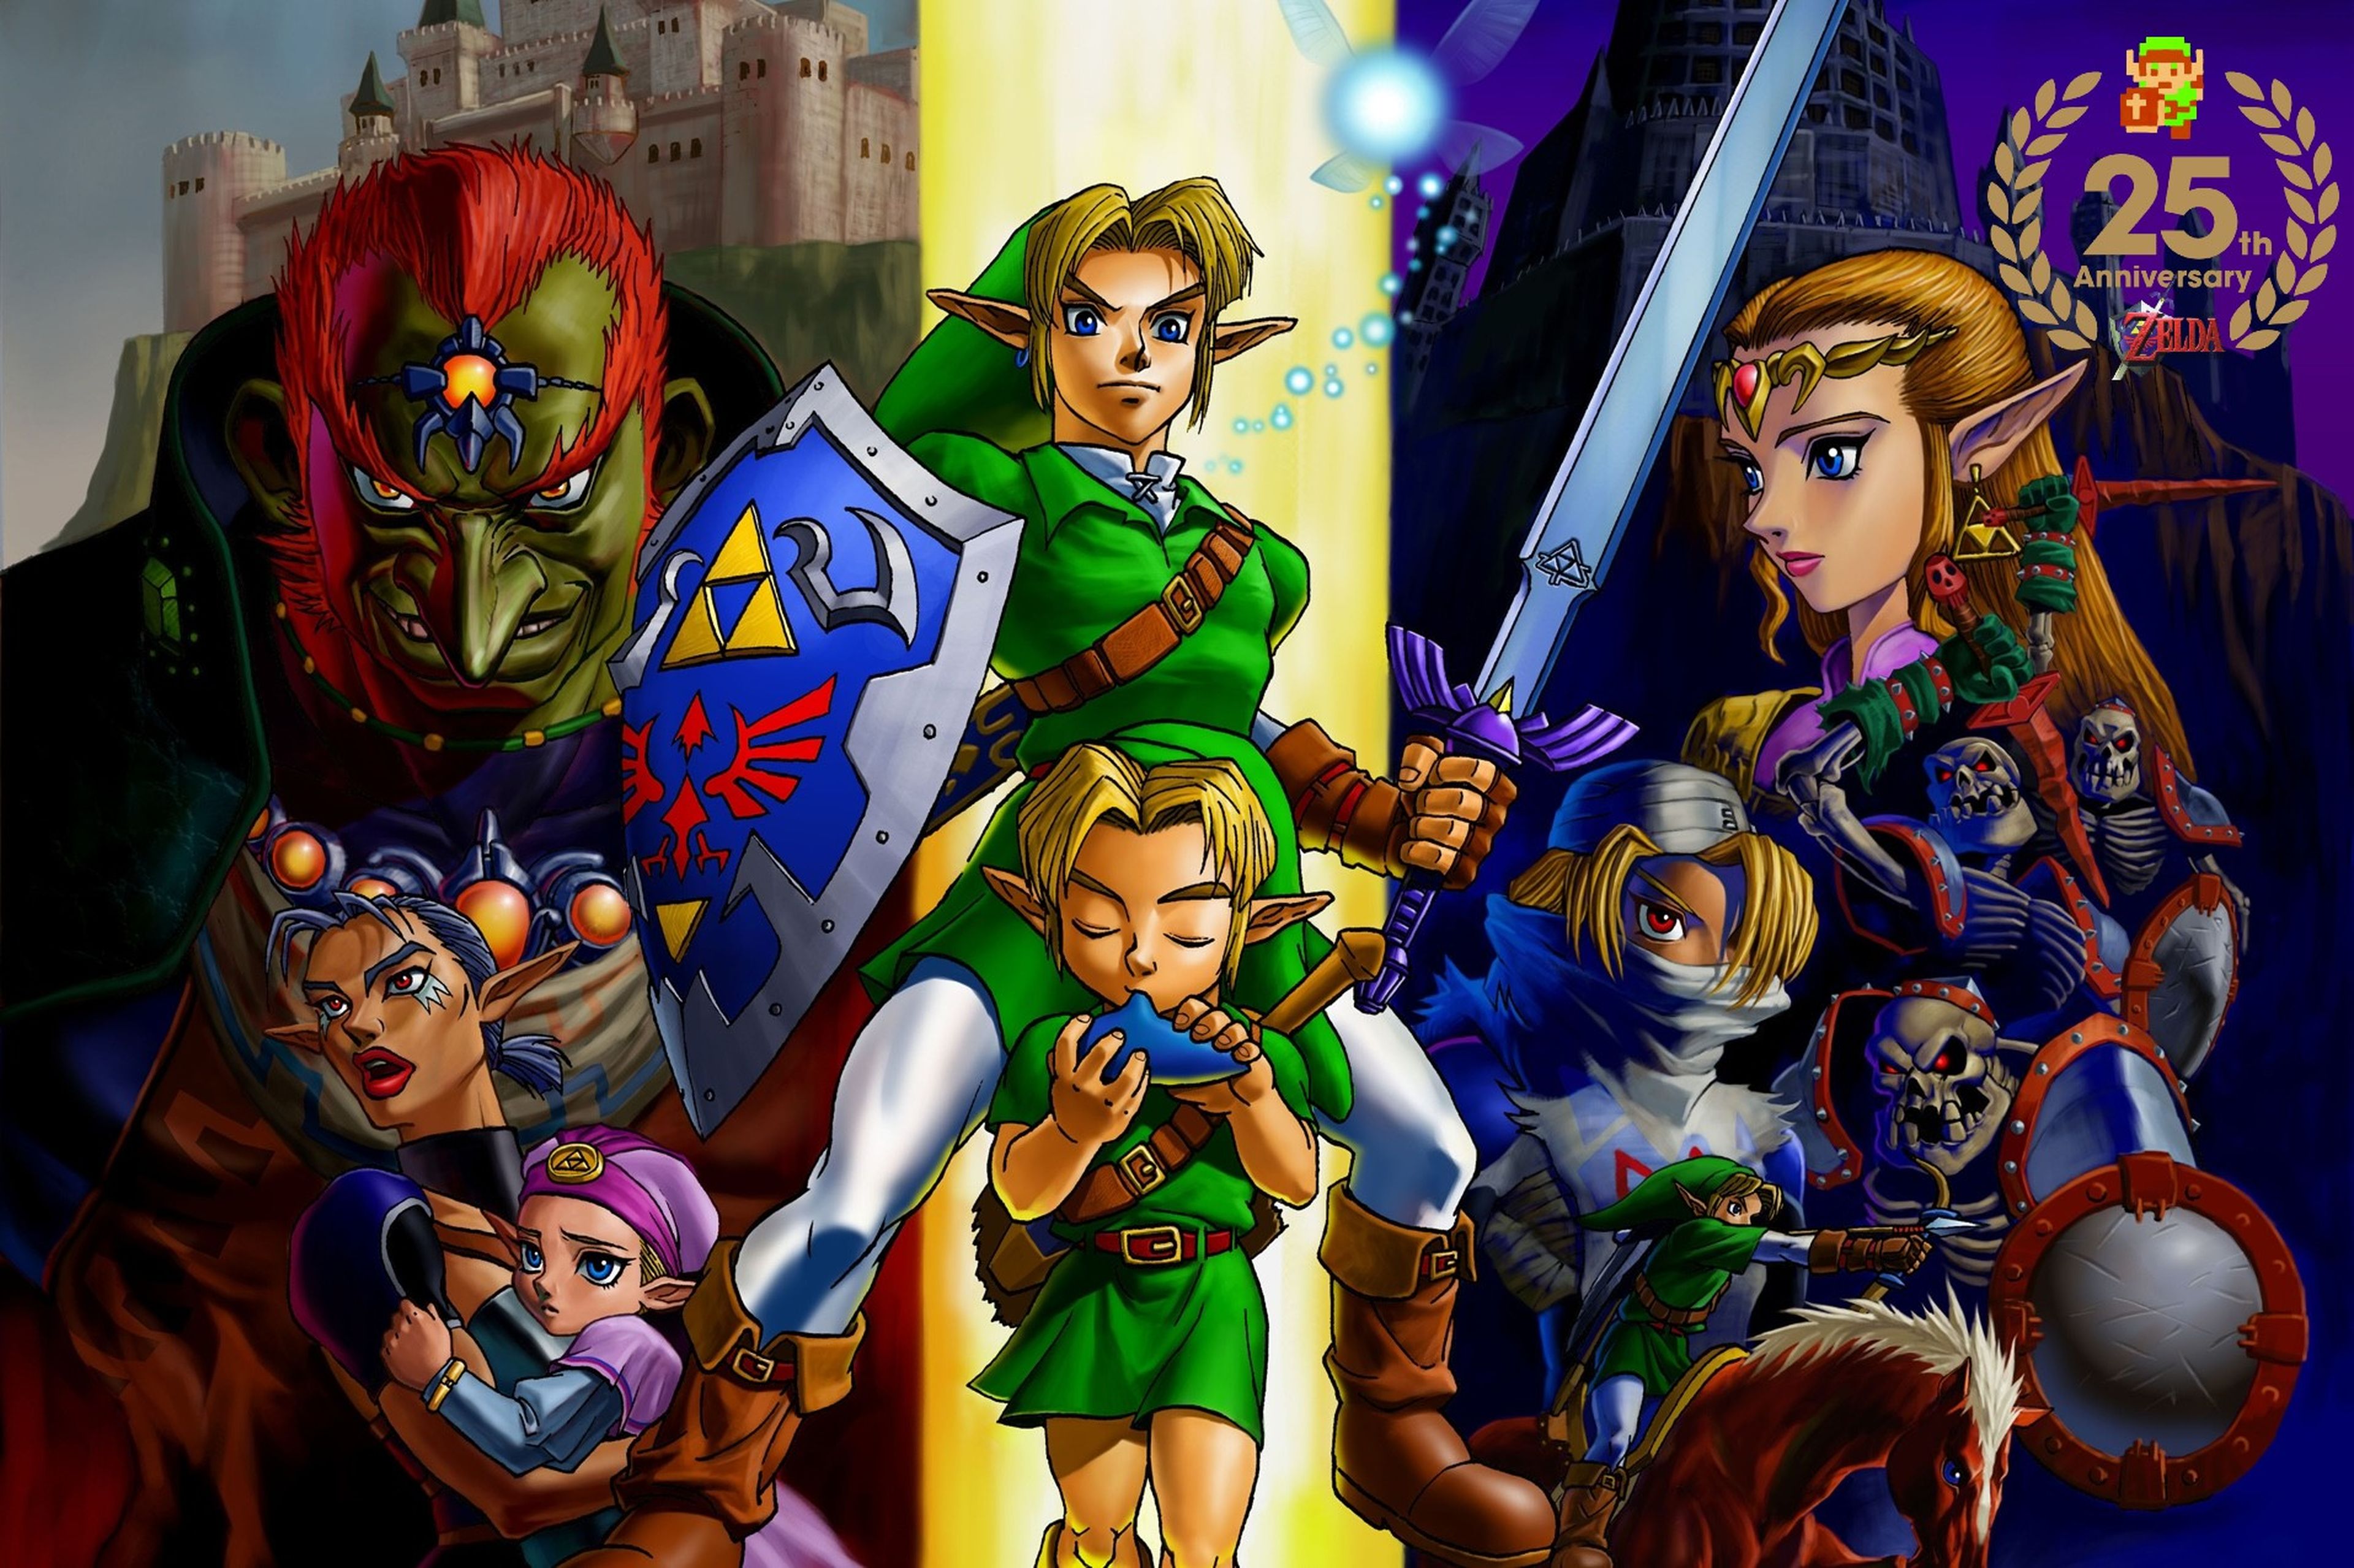 Zelda Ocarina of Time 25 aniversario